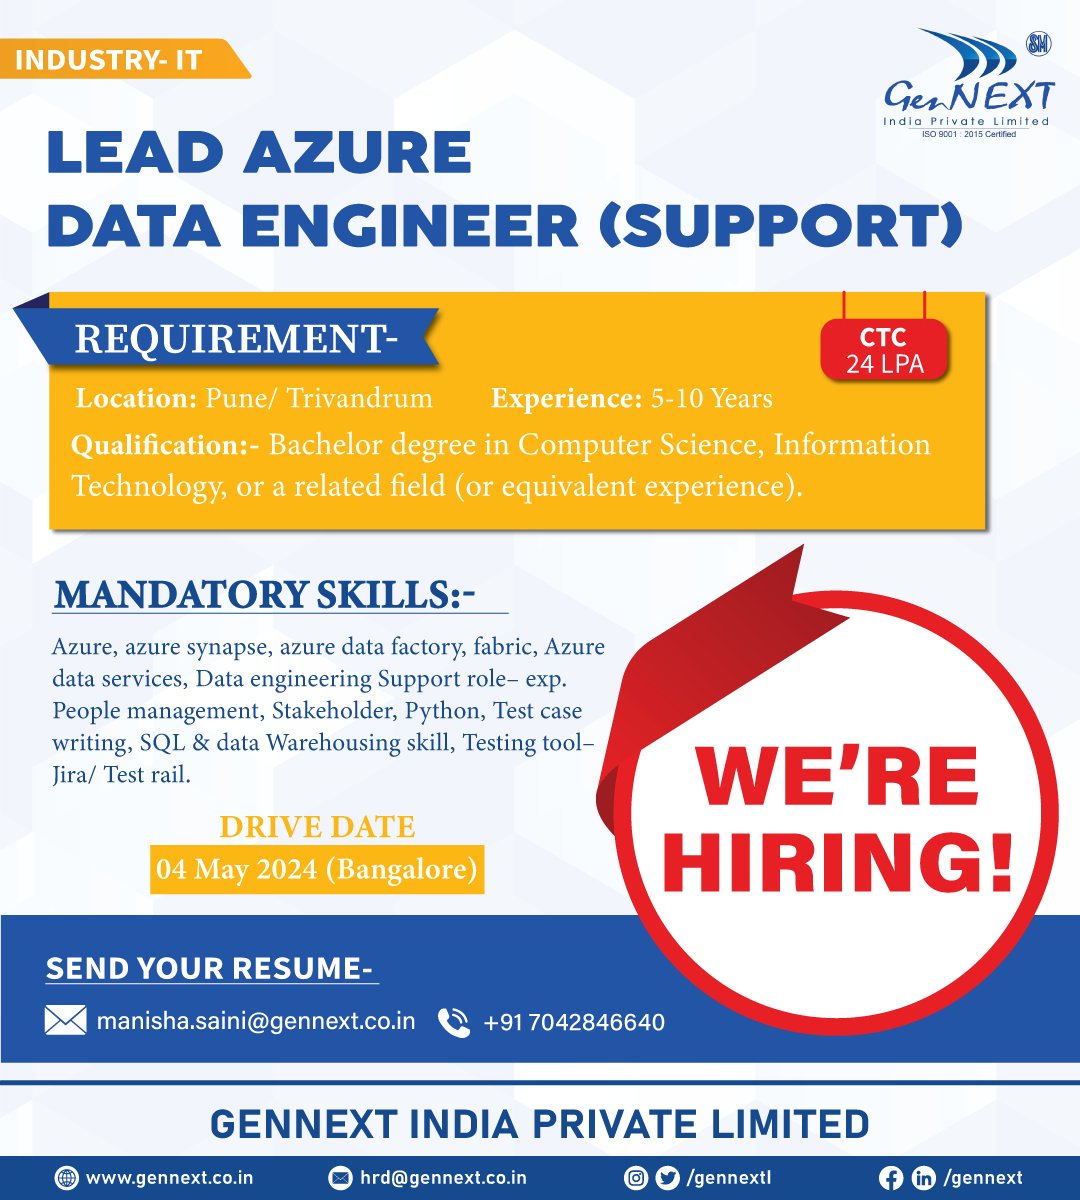 #UrgentHiring 💼📢🎯

Drive Date:- 4th May (Bangalore)

Position: Lead Azure Data Engineer (Support)
Location: Pune/ Trivandrum
CTC: 24 LPA

#Lead #Azure #DataEngineer #Pune #Trivandrum #hiringnow #jobseekers #hr #jobopenings2024 #gennextjob #gennexthiring #GenNext #hiring2024